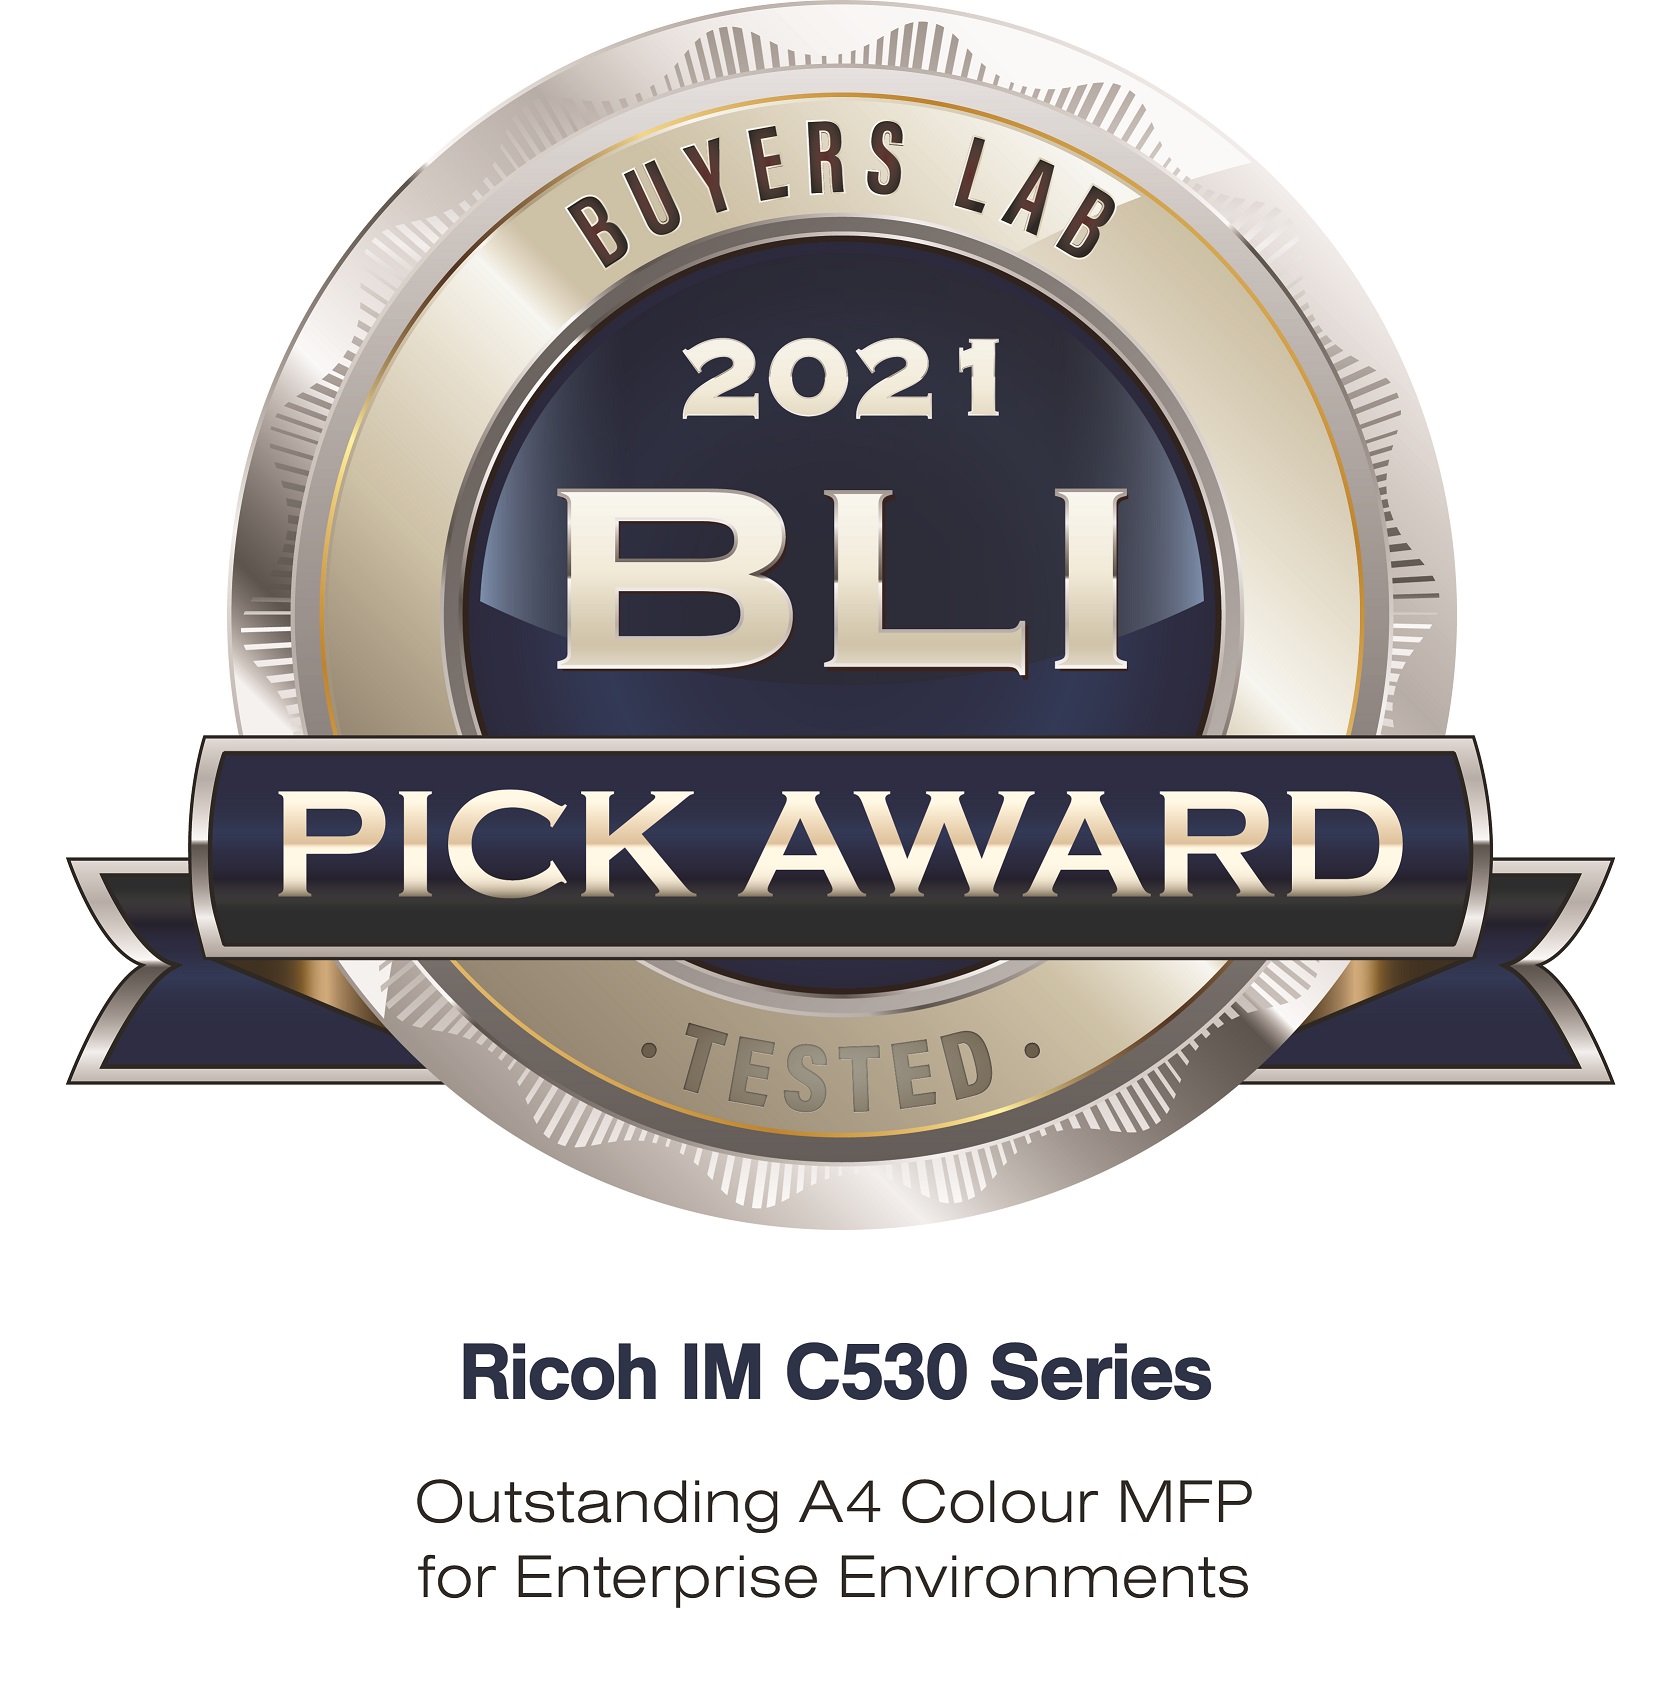 Ricoh wins BLI Award from Keypoint Intelligence for colour intelligent MFP